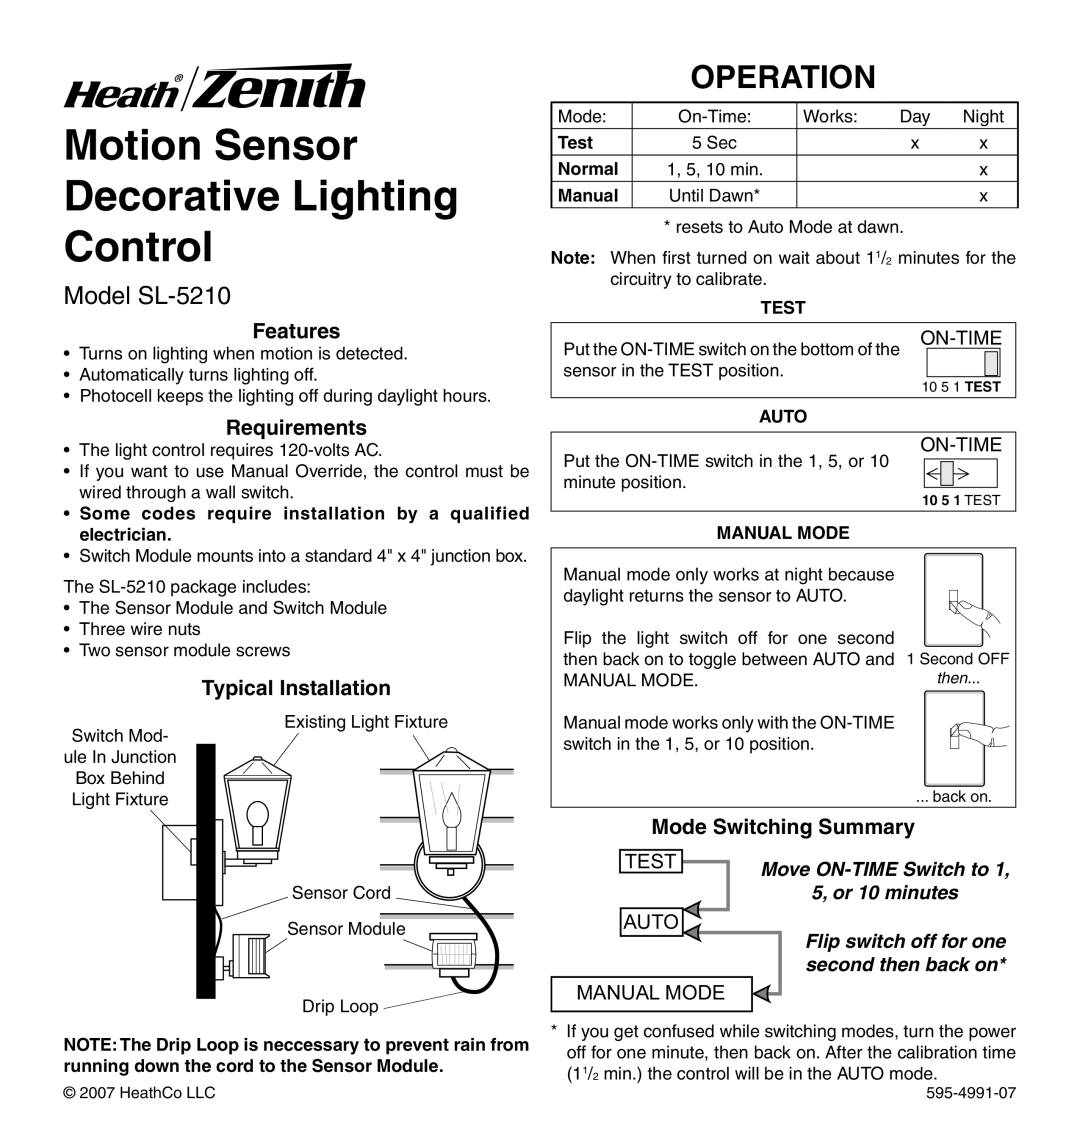 Heath Zenith manual Motion Sensor Decorative Lighting Control, Operation, Model SL-5210, Features, Requirements, Test 